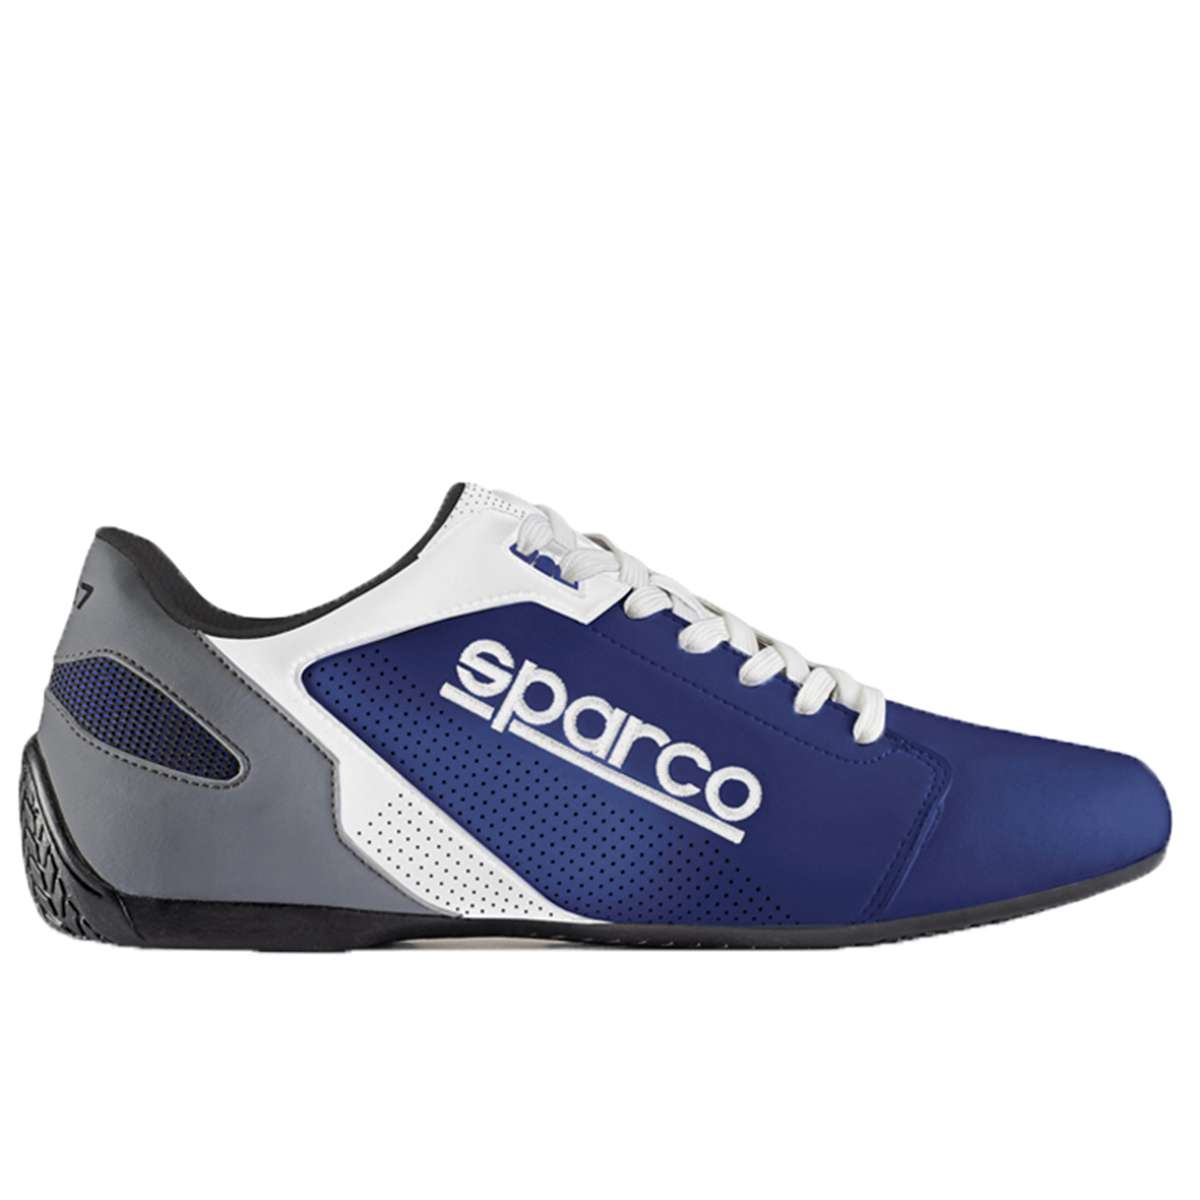 Sneakers Scarpa bassa Sparco SL-17 in pelle leggera Azzurro Bianco 001263..AZBI 